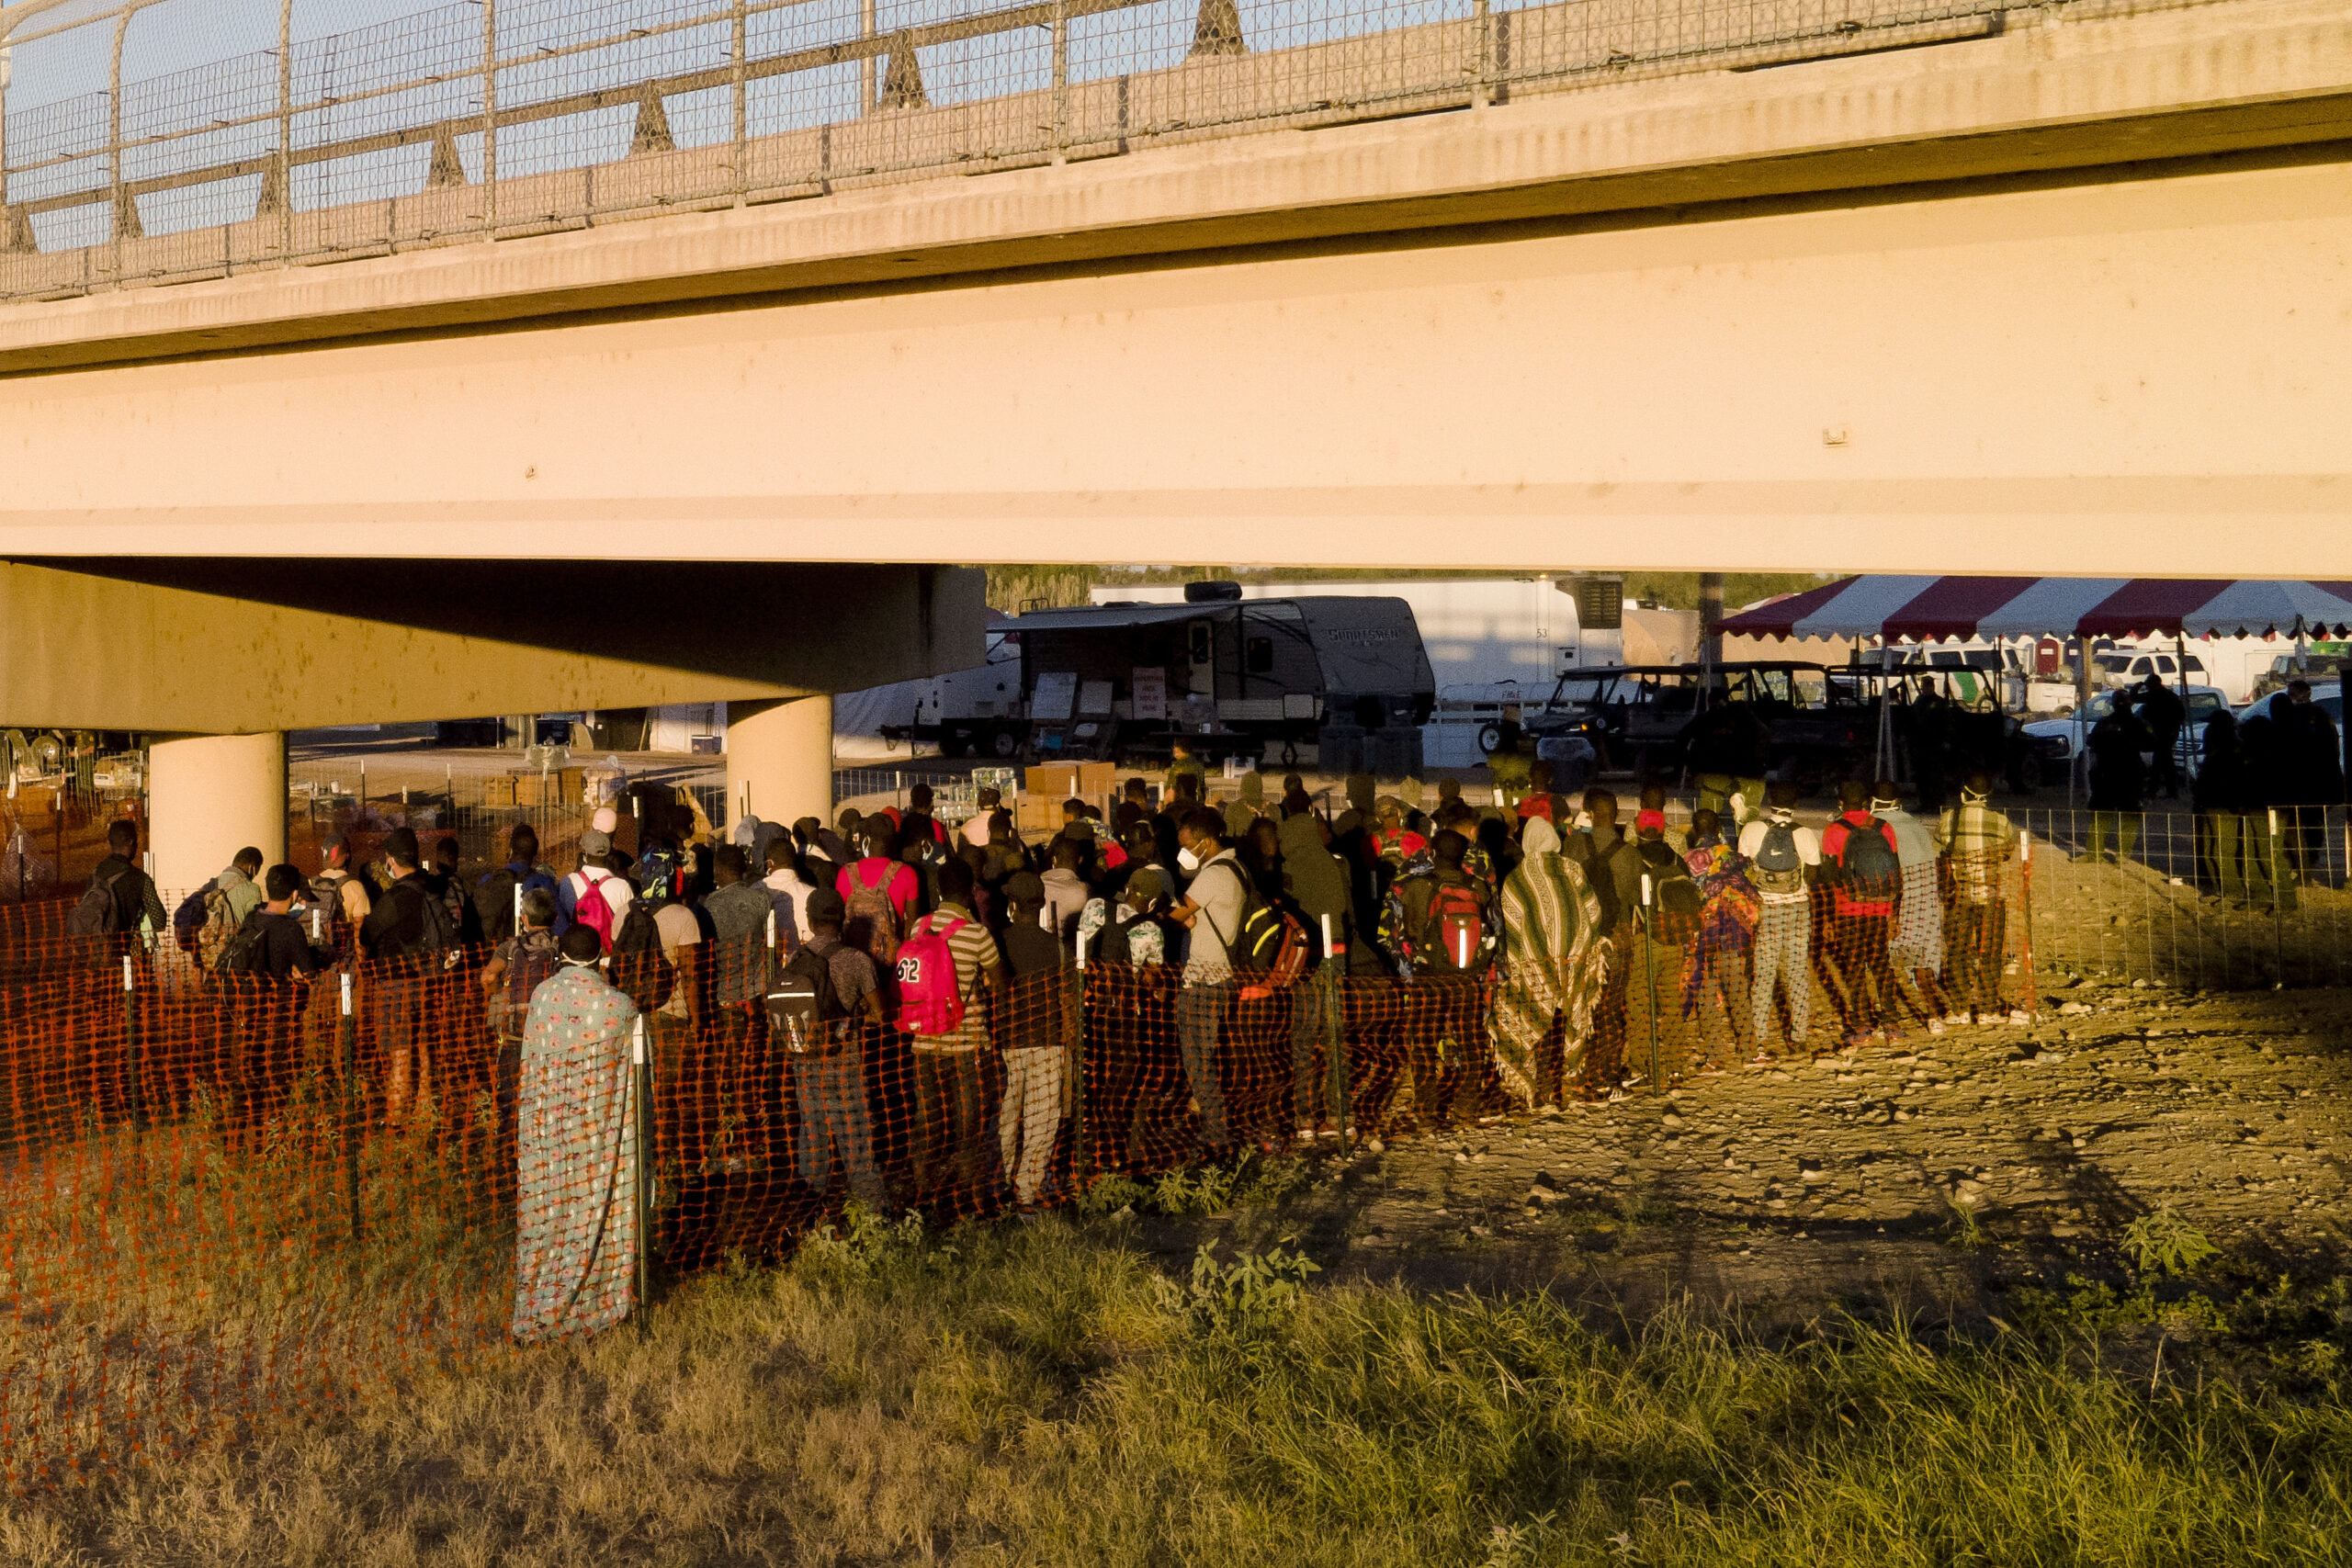 Migrants, many from Haiti, wait in lines to board buses under the Del Rio International Bridge, Friday, Sept. 24, 2021, in Del Rio, Texas. (AP Photo/Julio Cortez)